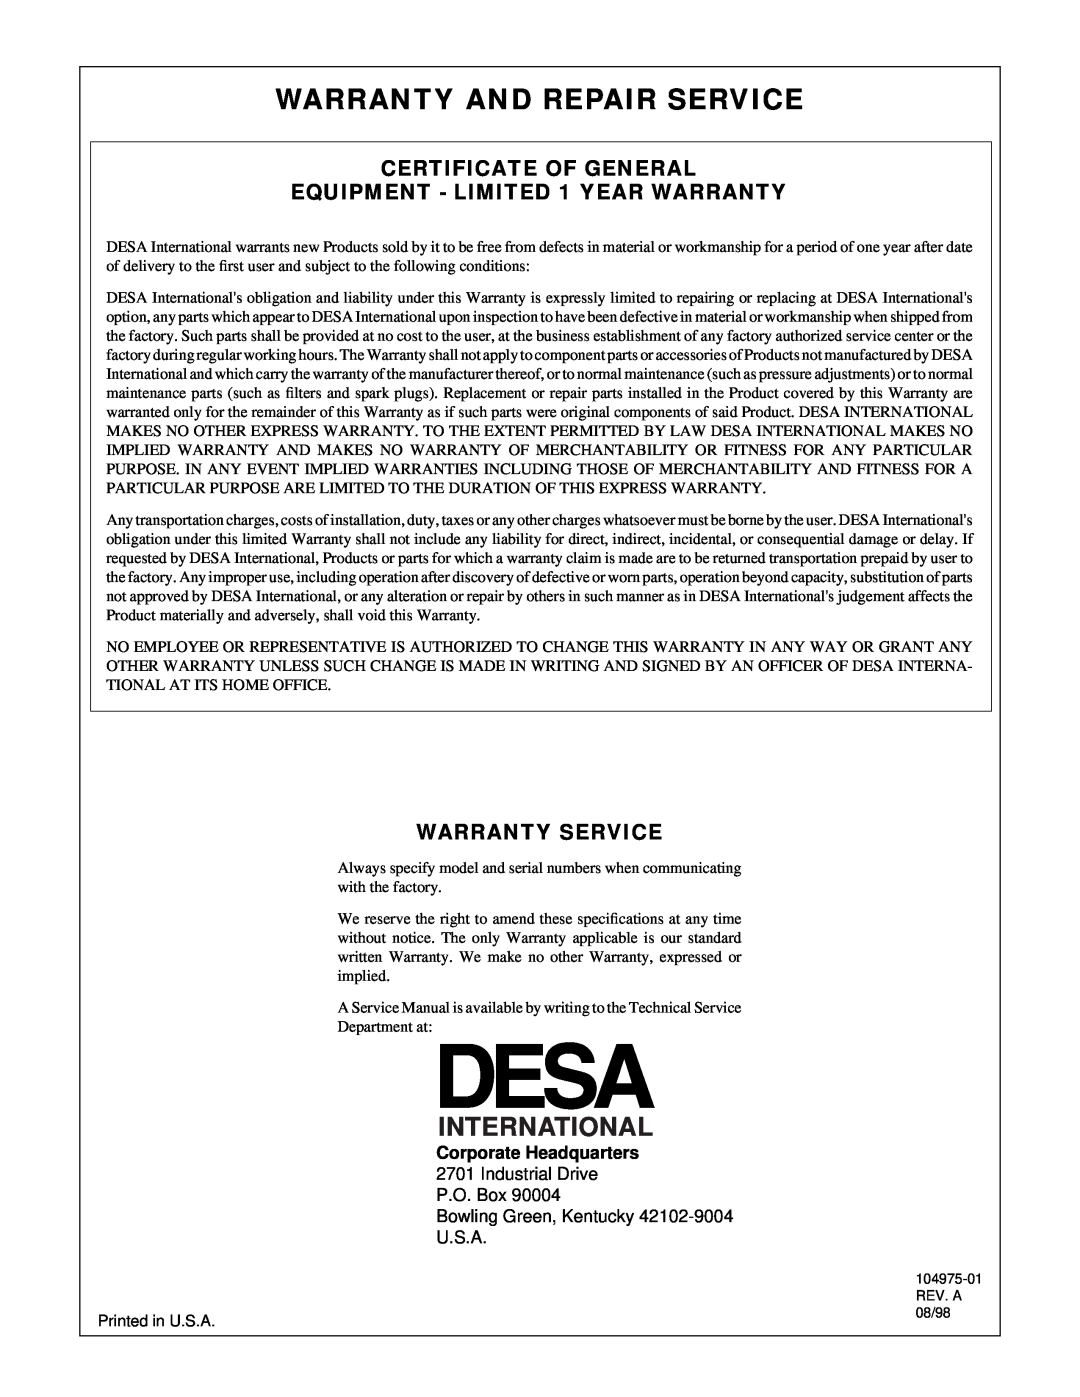 Desa R 15 E UK Warranty And Repair Service, Certificate Of General, EQUIPMENT - LIMITED 1 YEAR WARRANTY, Warranty Service 